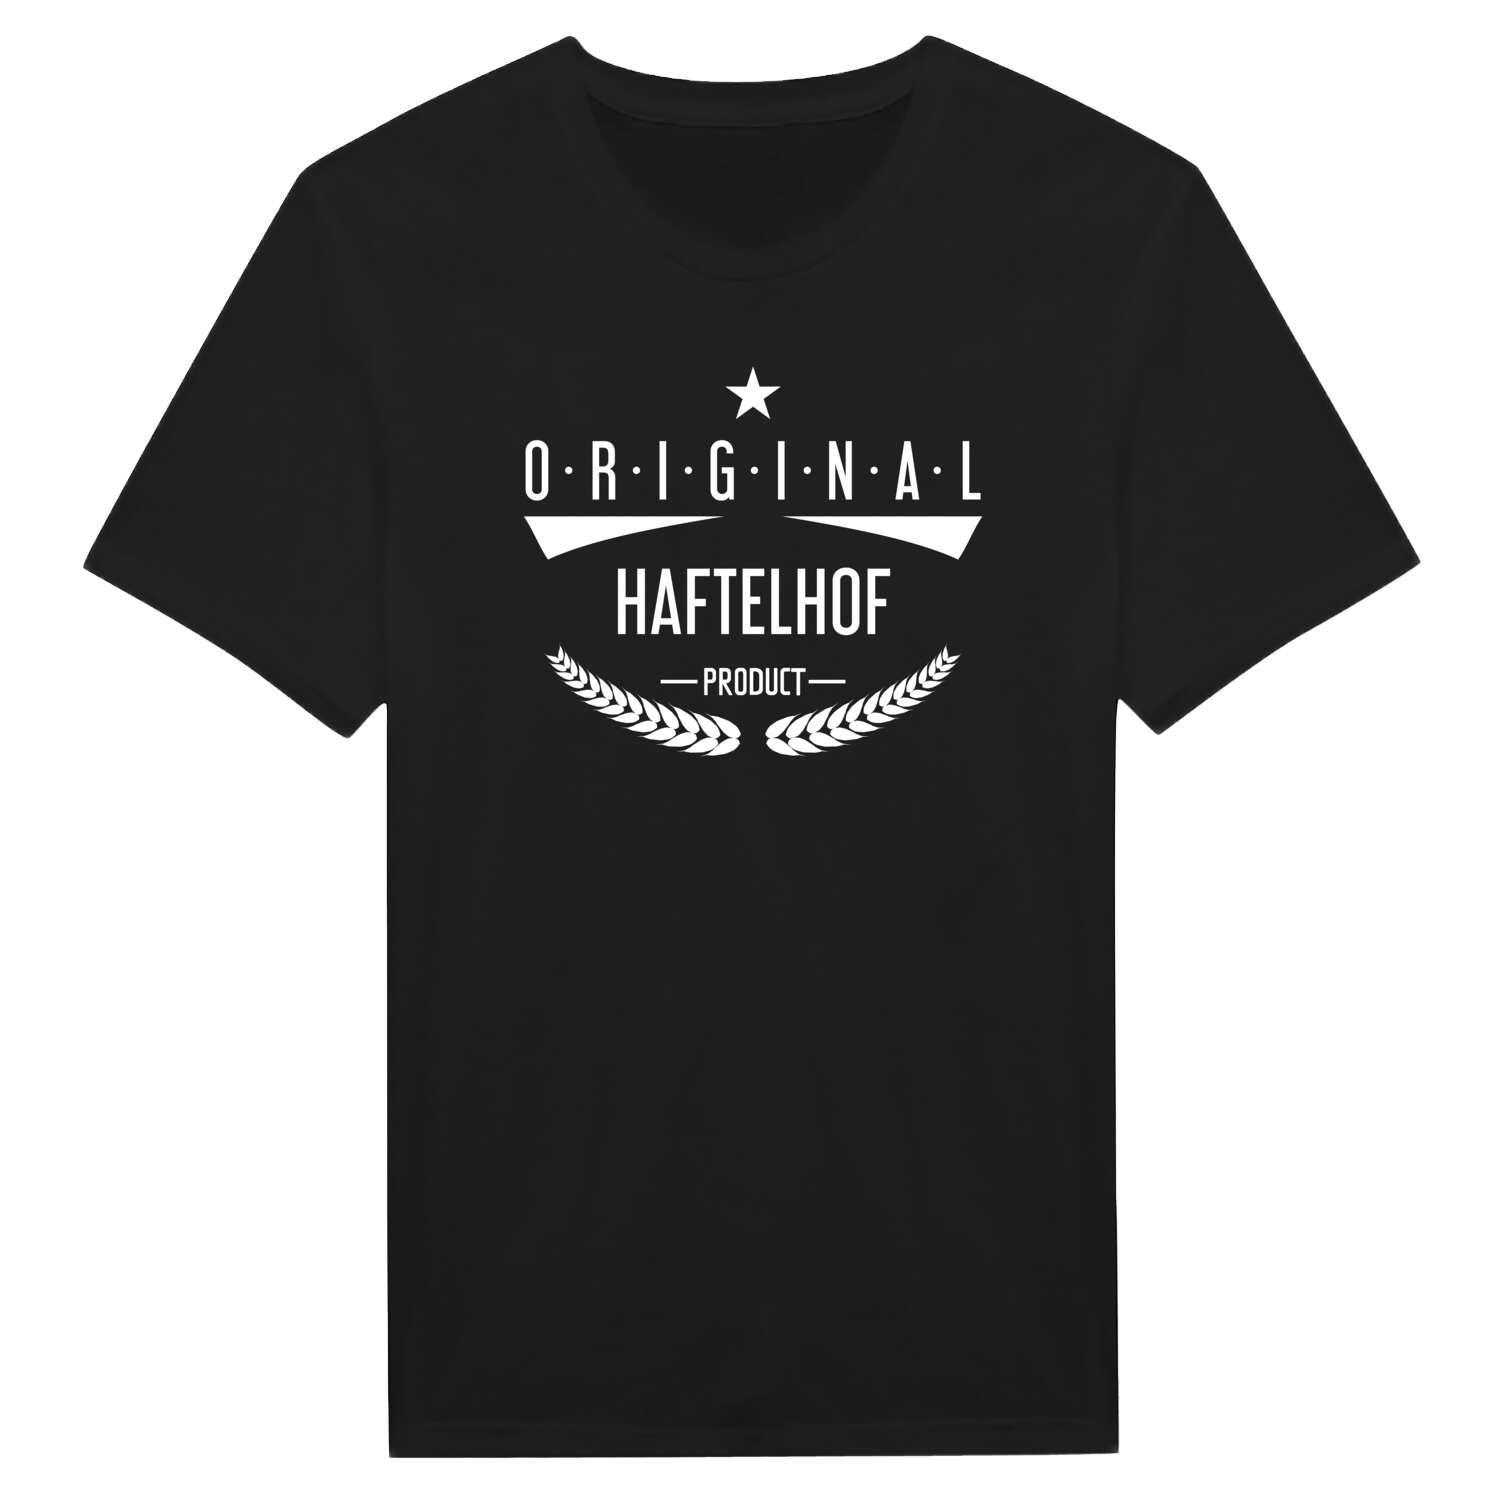 Haftelhof T-Shirt »Original Product«